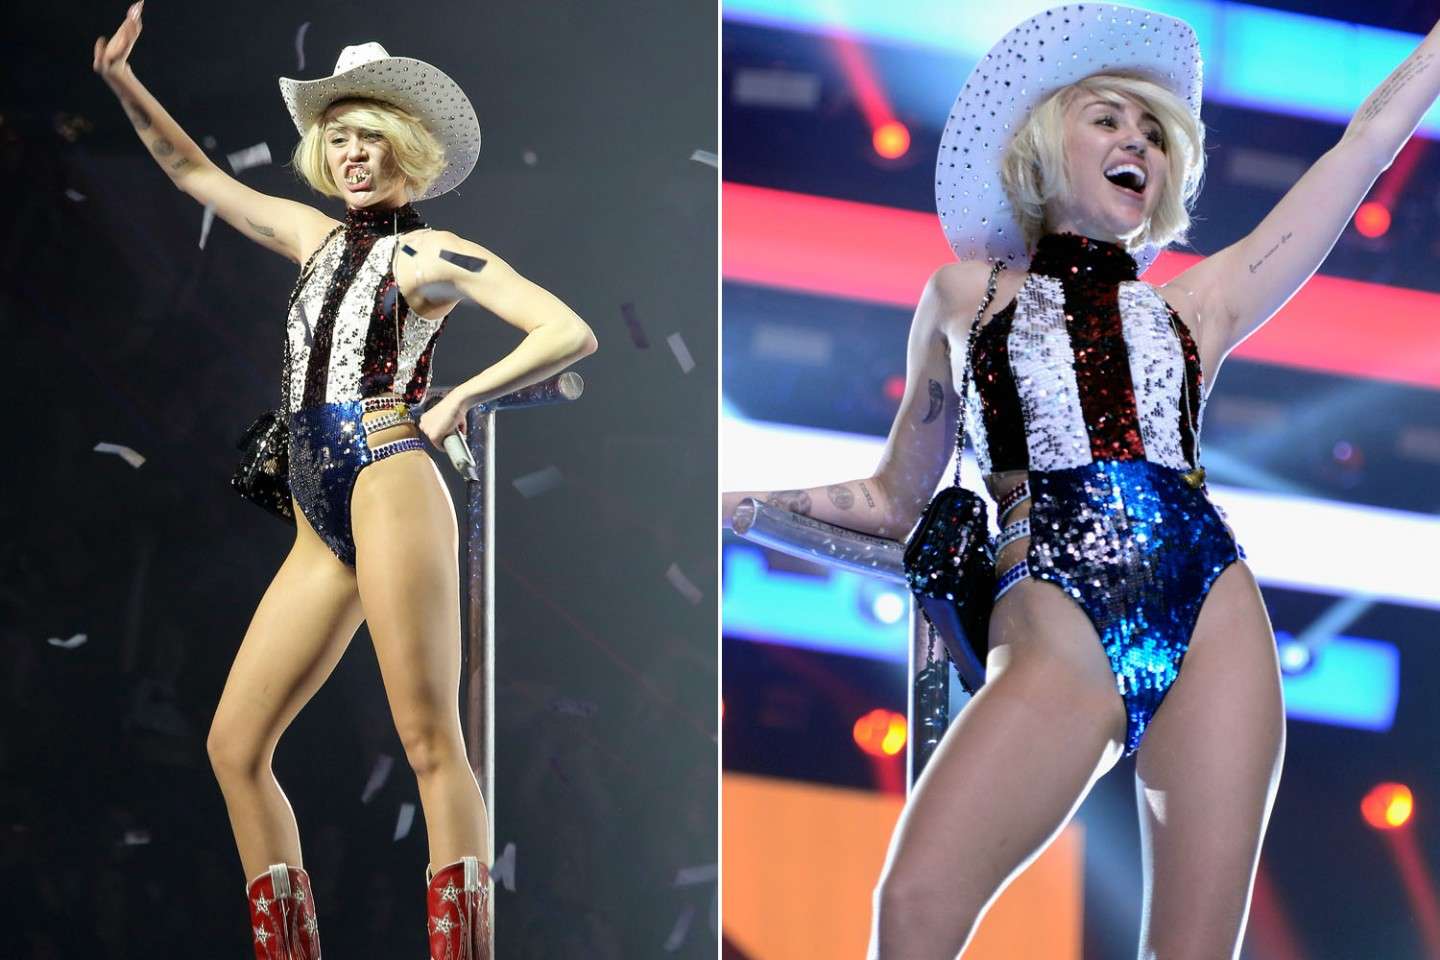 Miley Cyrus in concerto con look a stelle e strisce